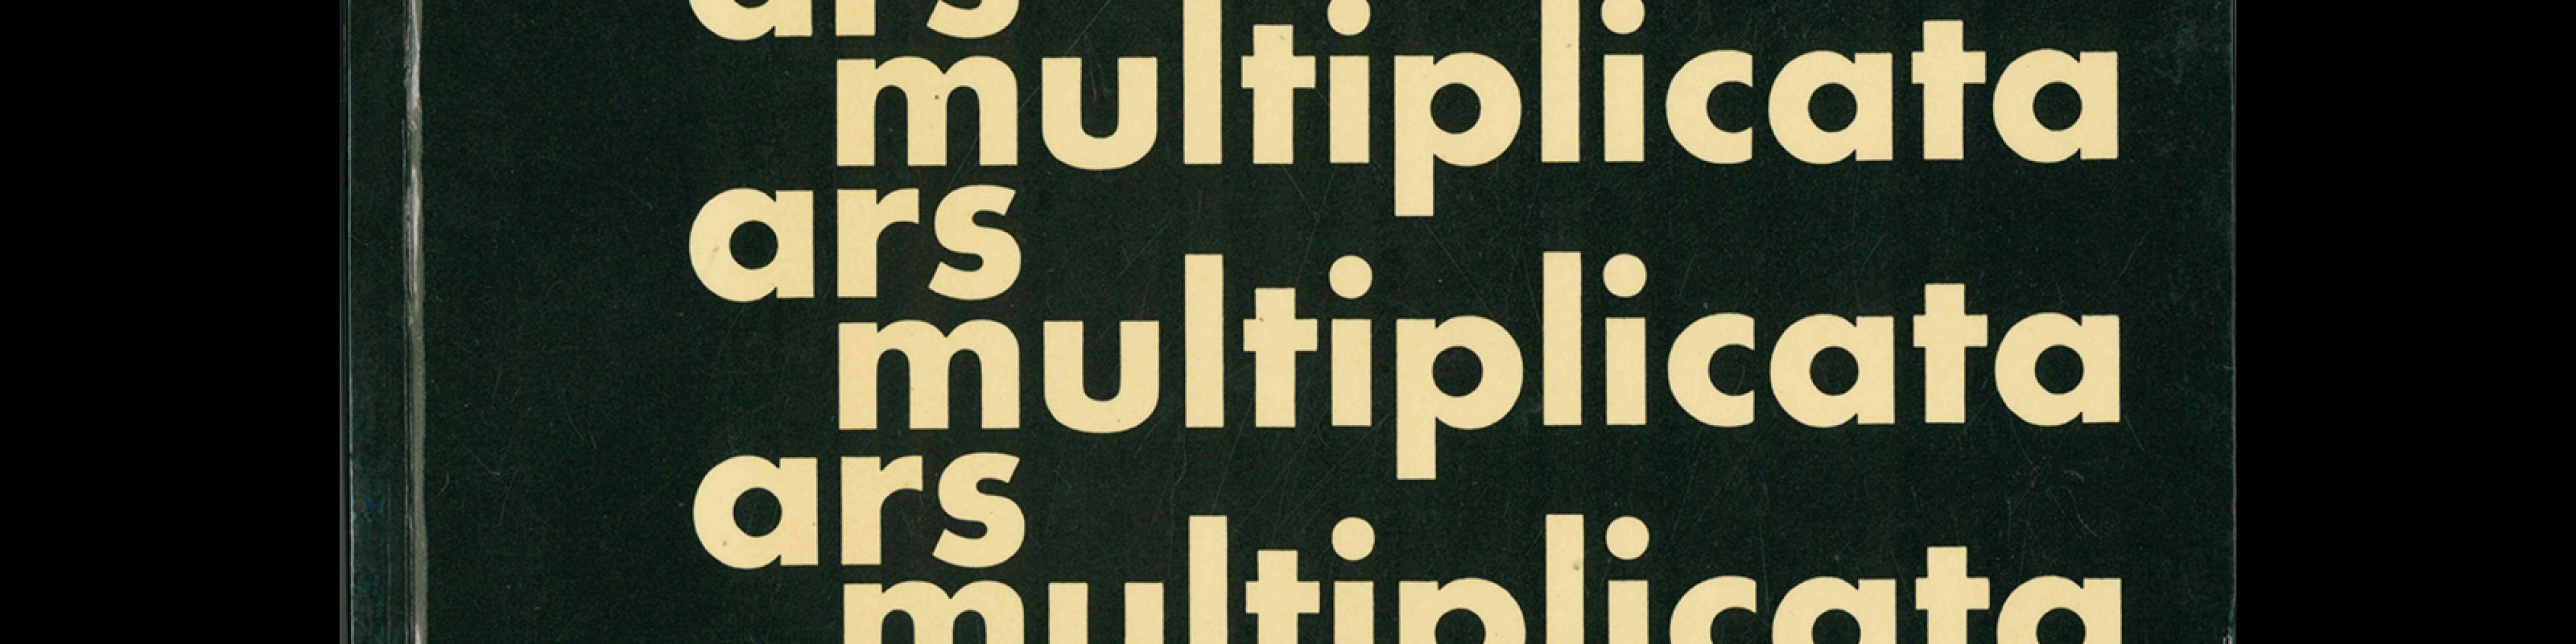 ars multiplicata: Vervielfältigte Kunst seit 1945, Köln, Wallraf-Richartz-Museum, 1968. Catalogue design by Rudolph Müller